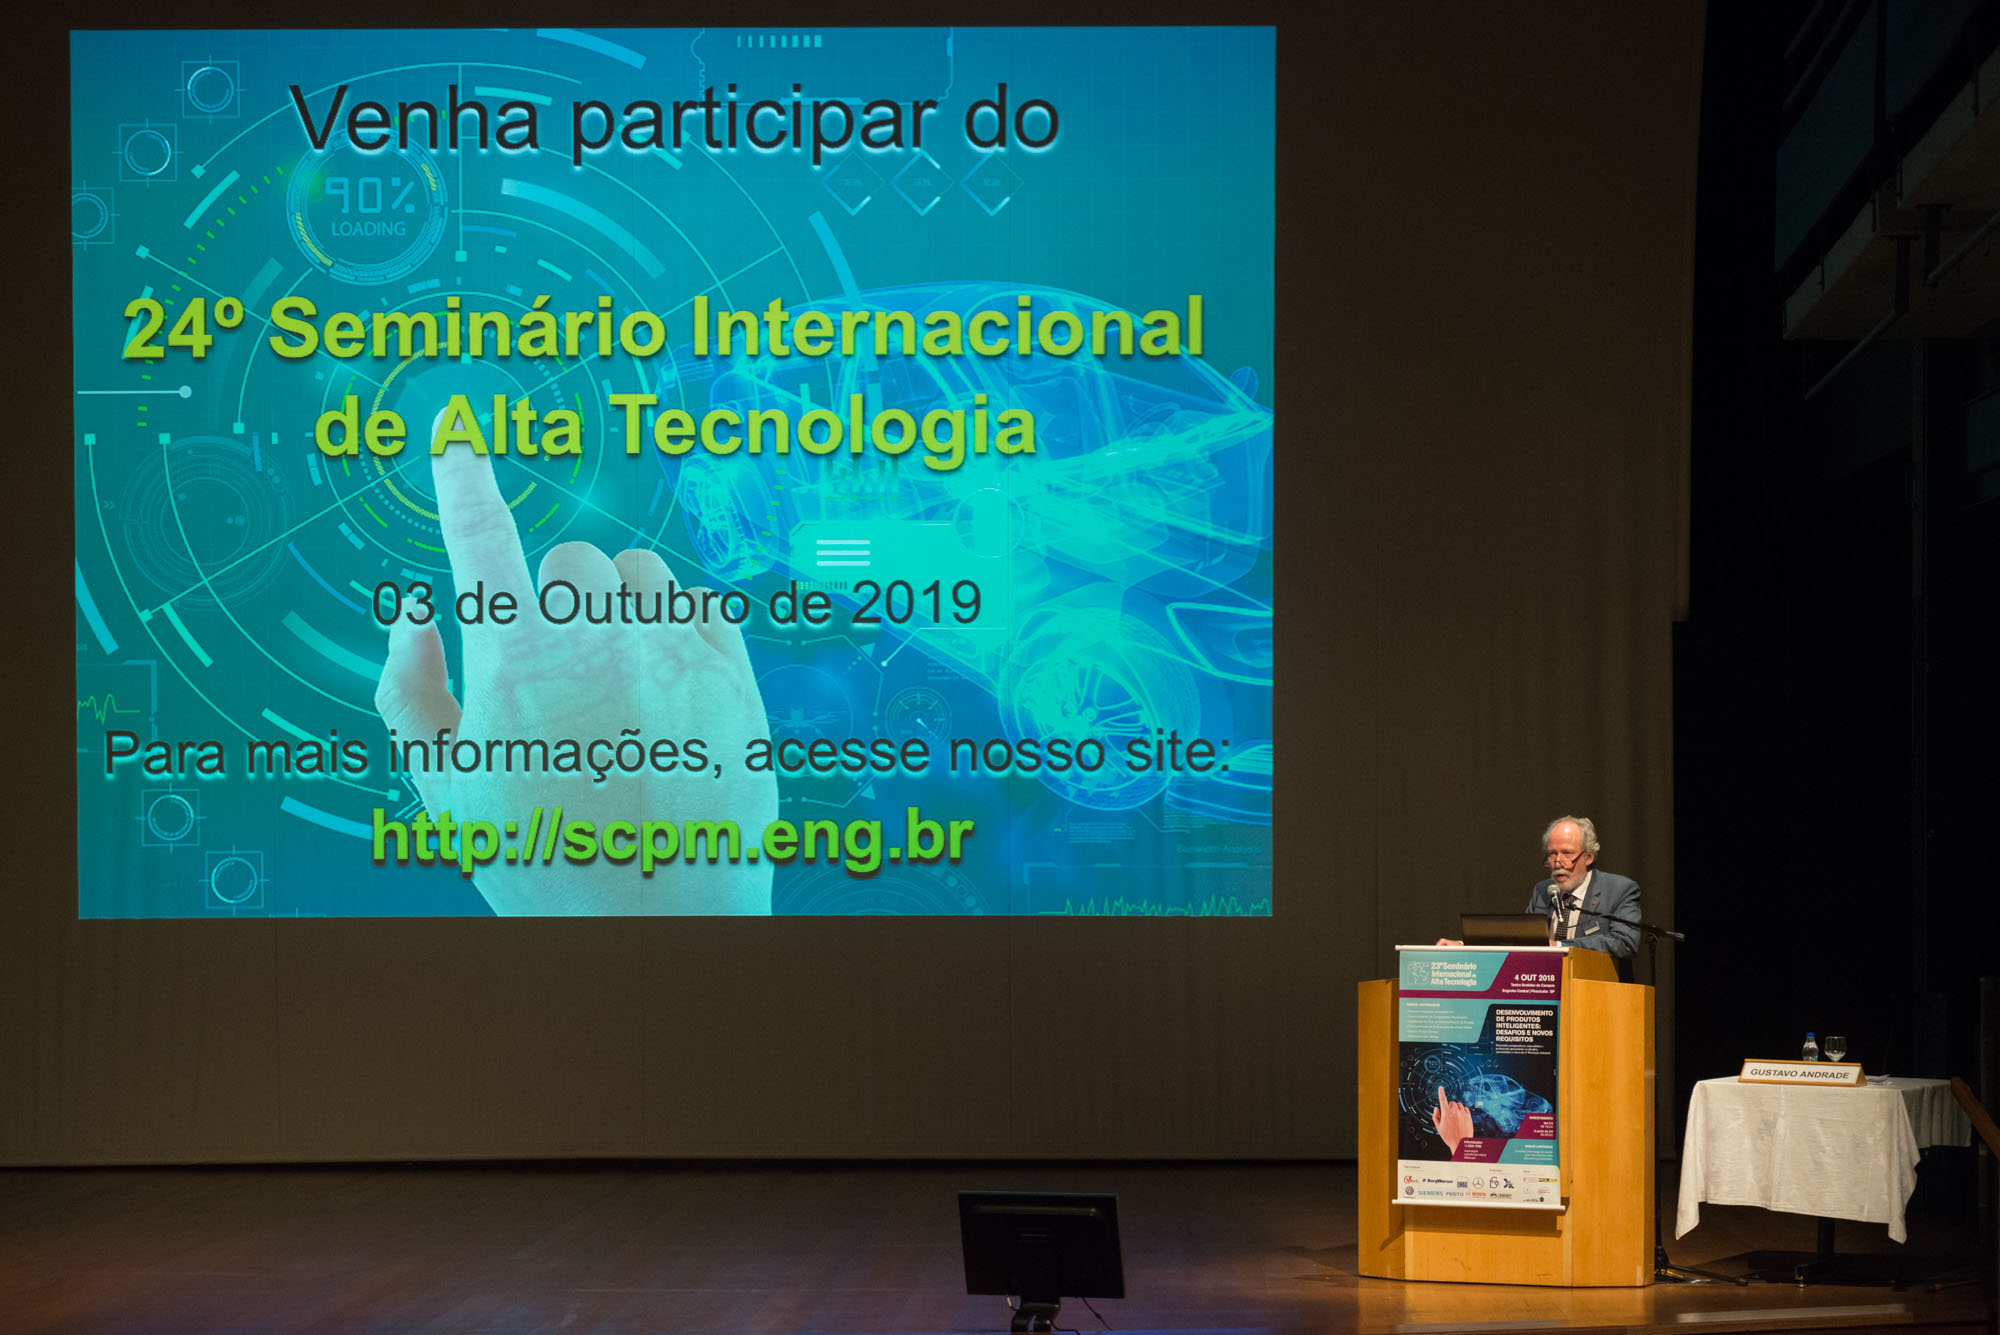 Prof. Dr. Klaus Schützer presenting his talk